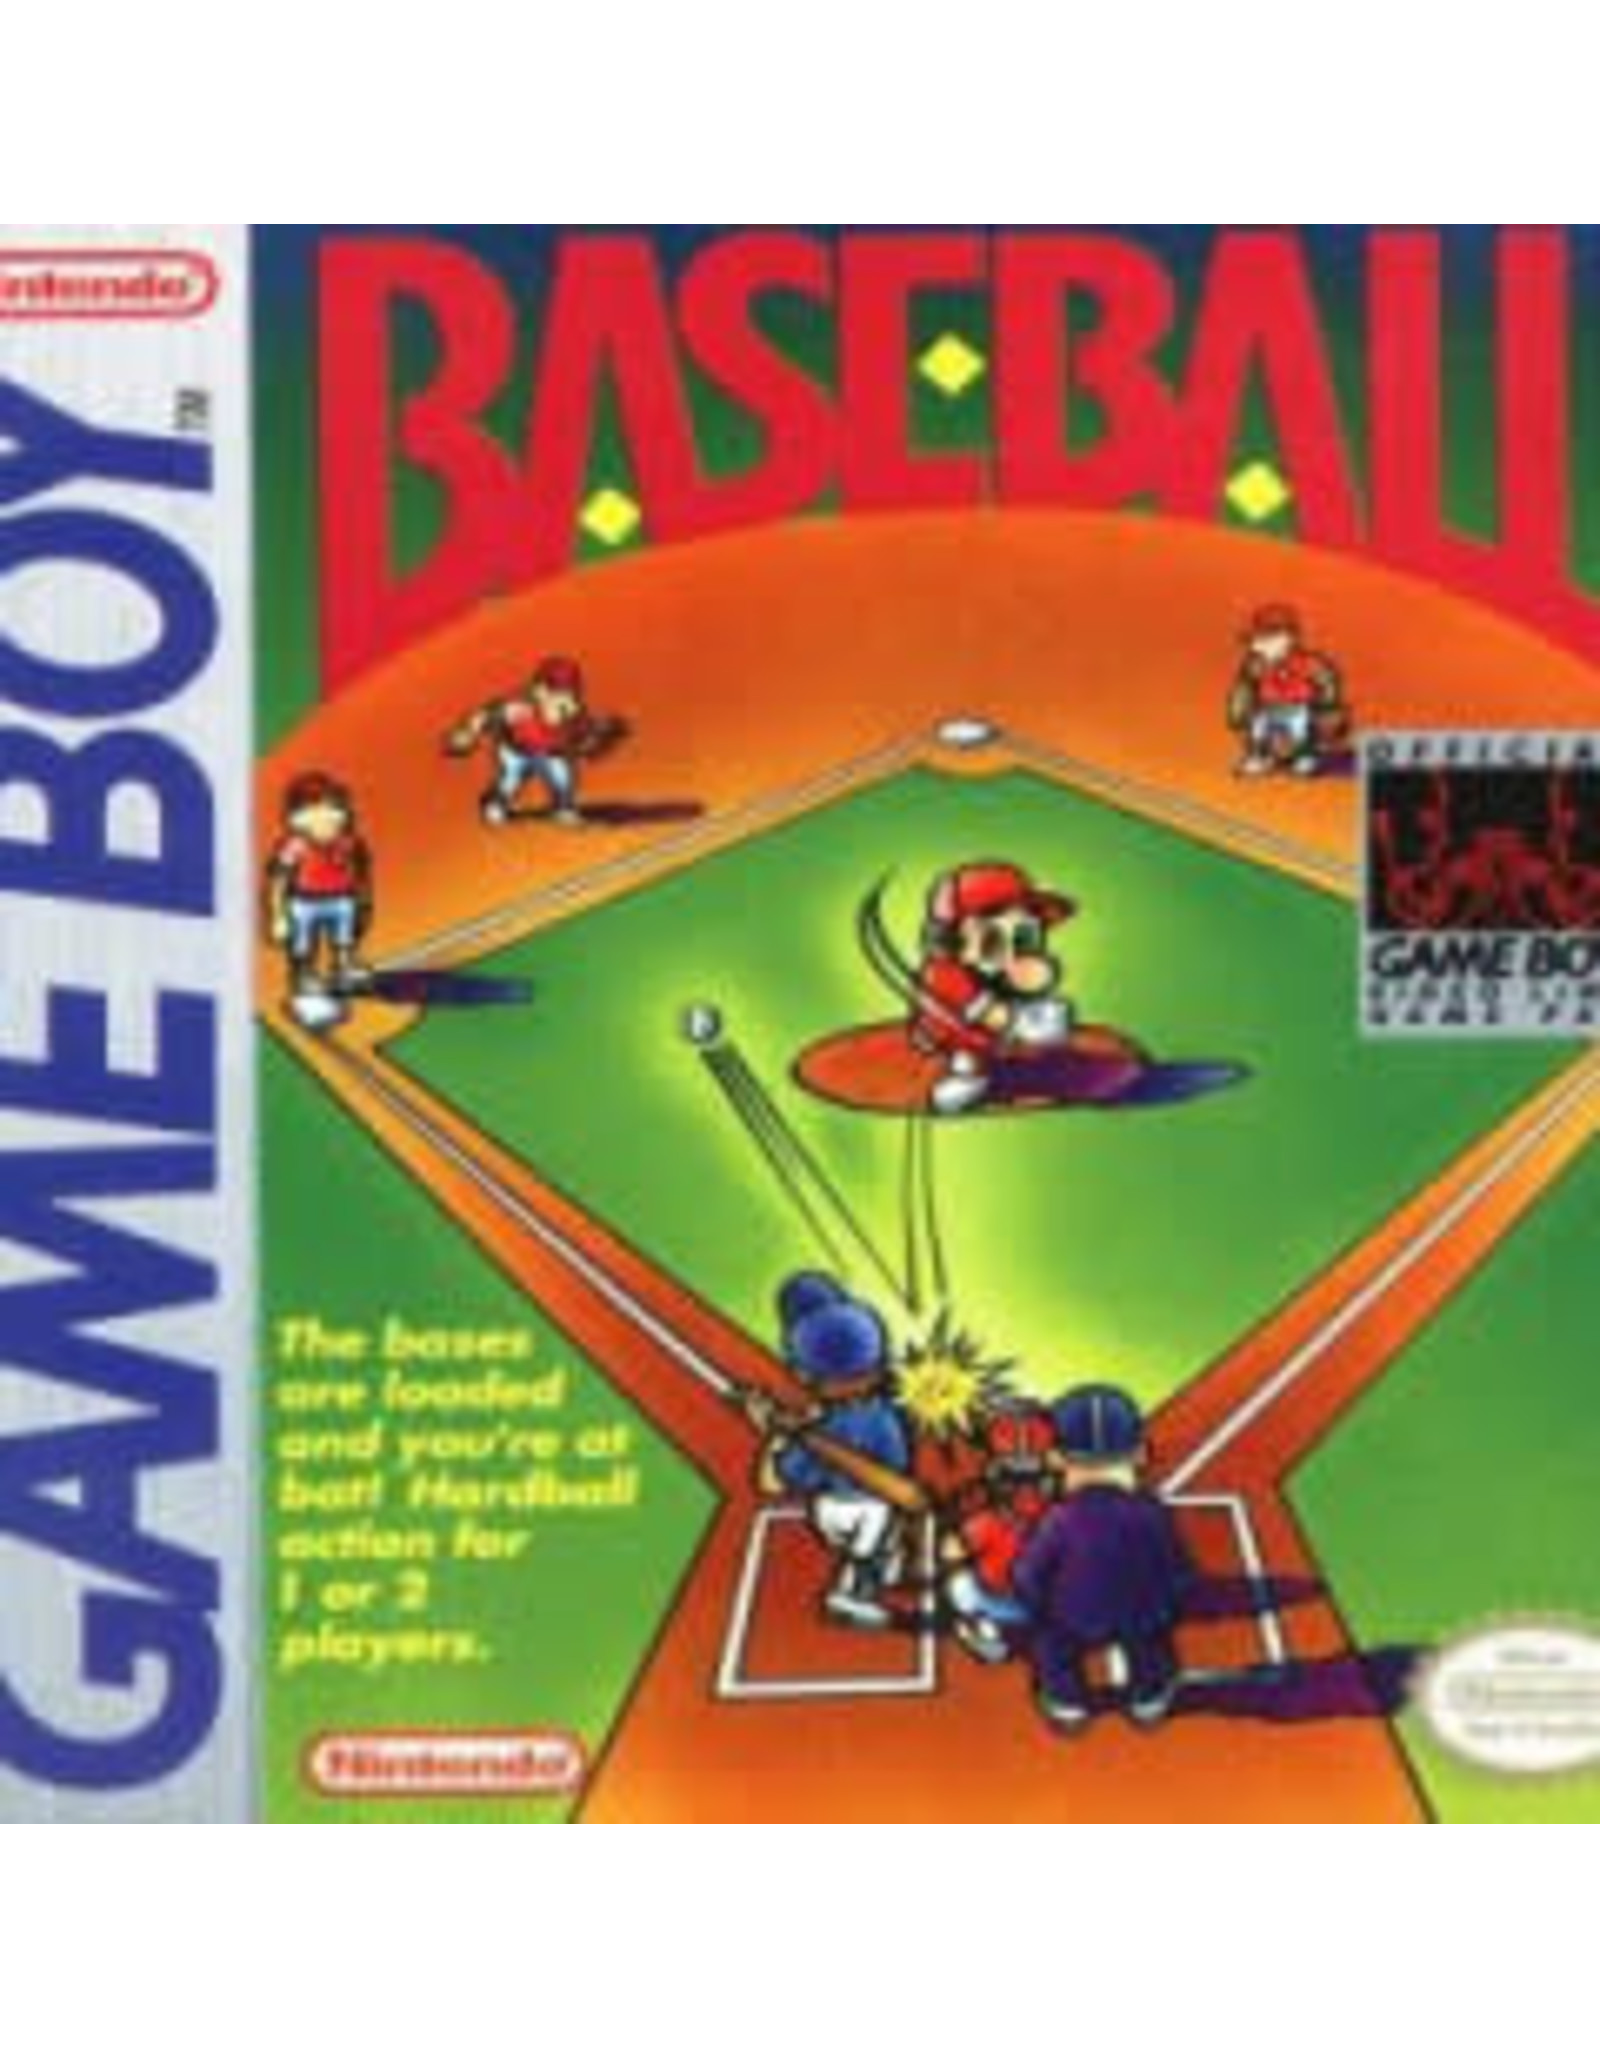 Game Boy Baseball (Cart Only, Damaged Label)